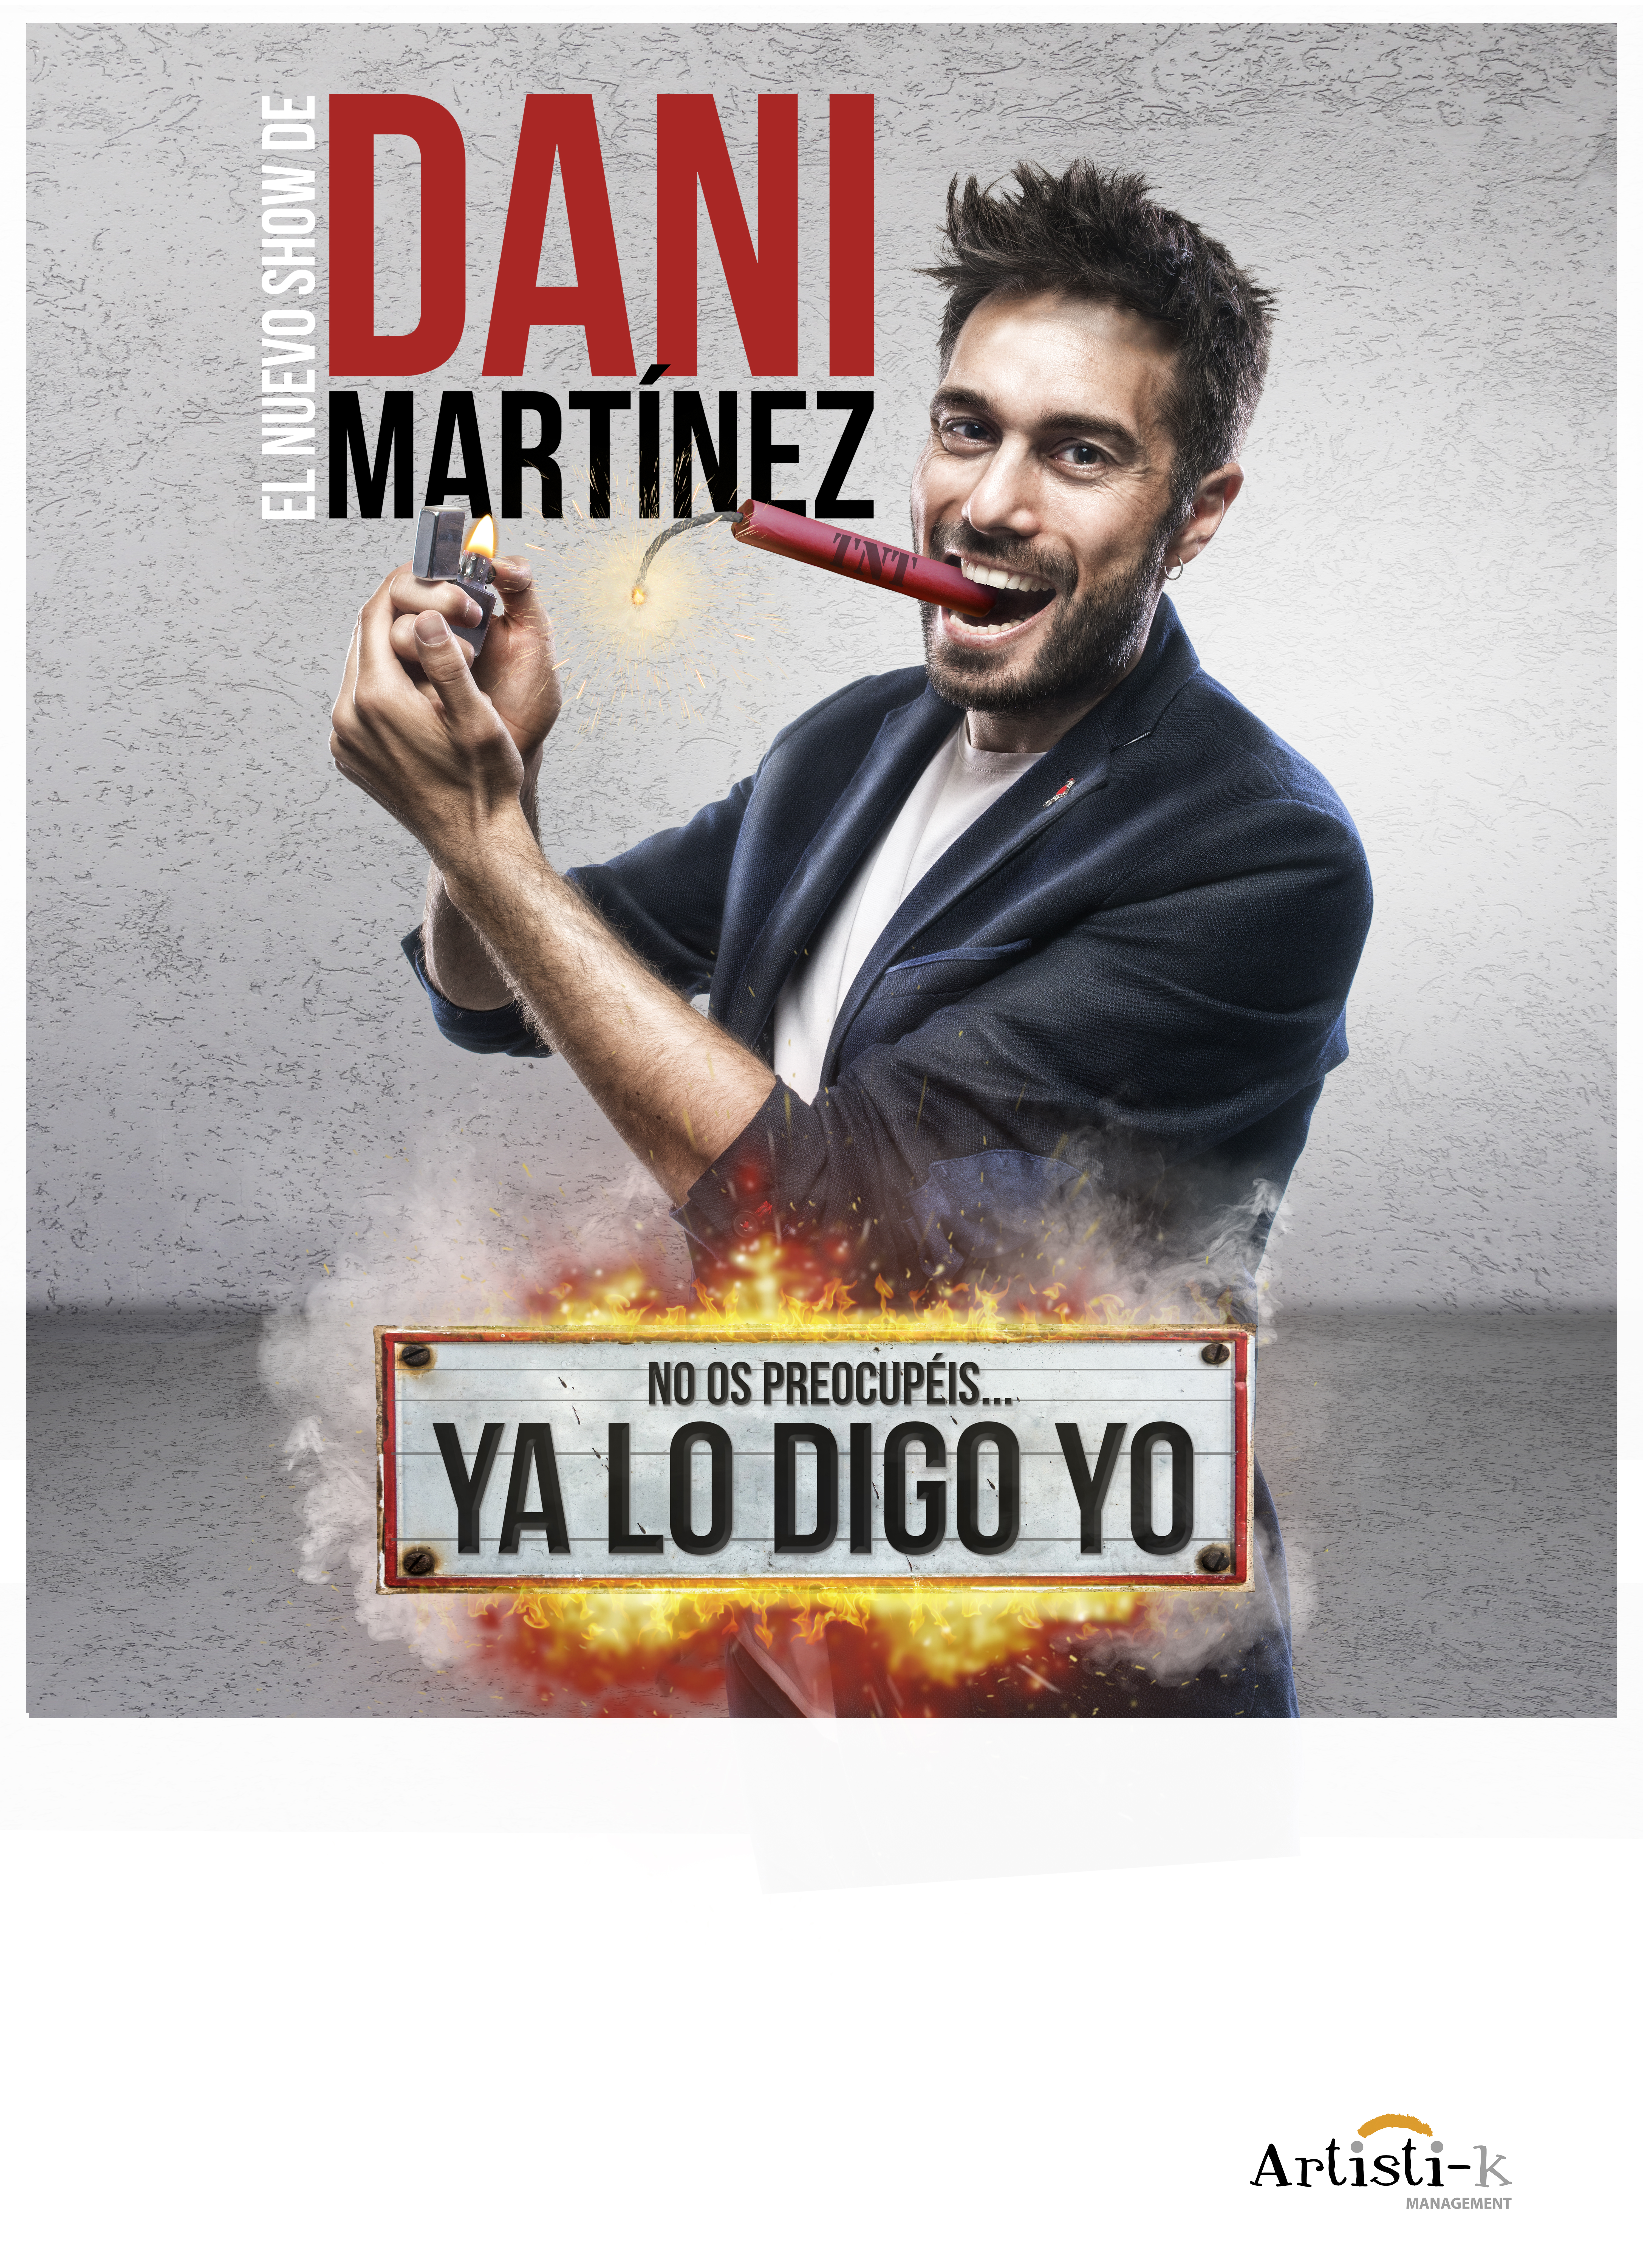 Dani Martínez - "Ya Lo Digo Yo"